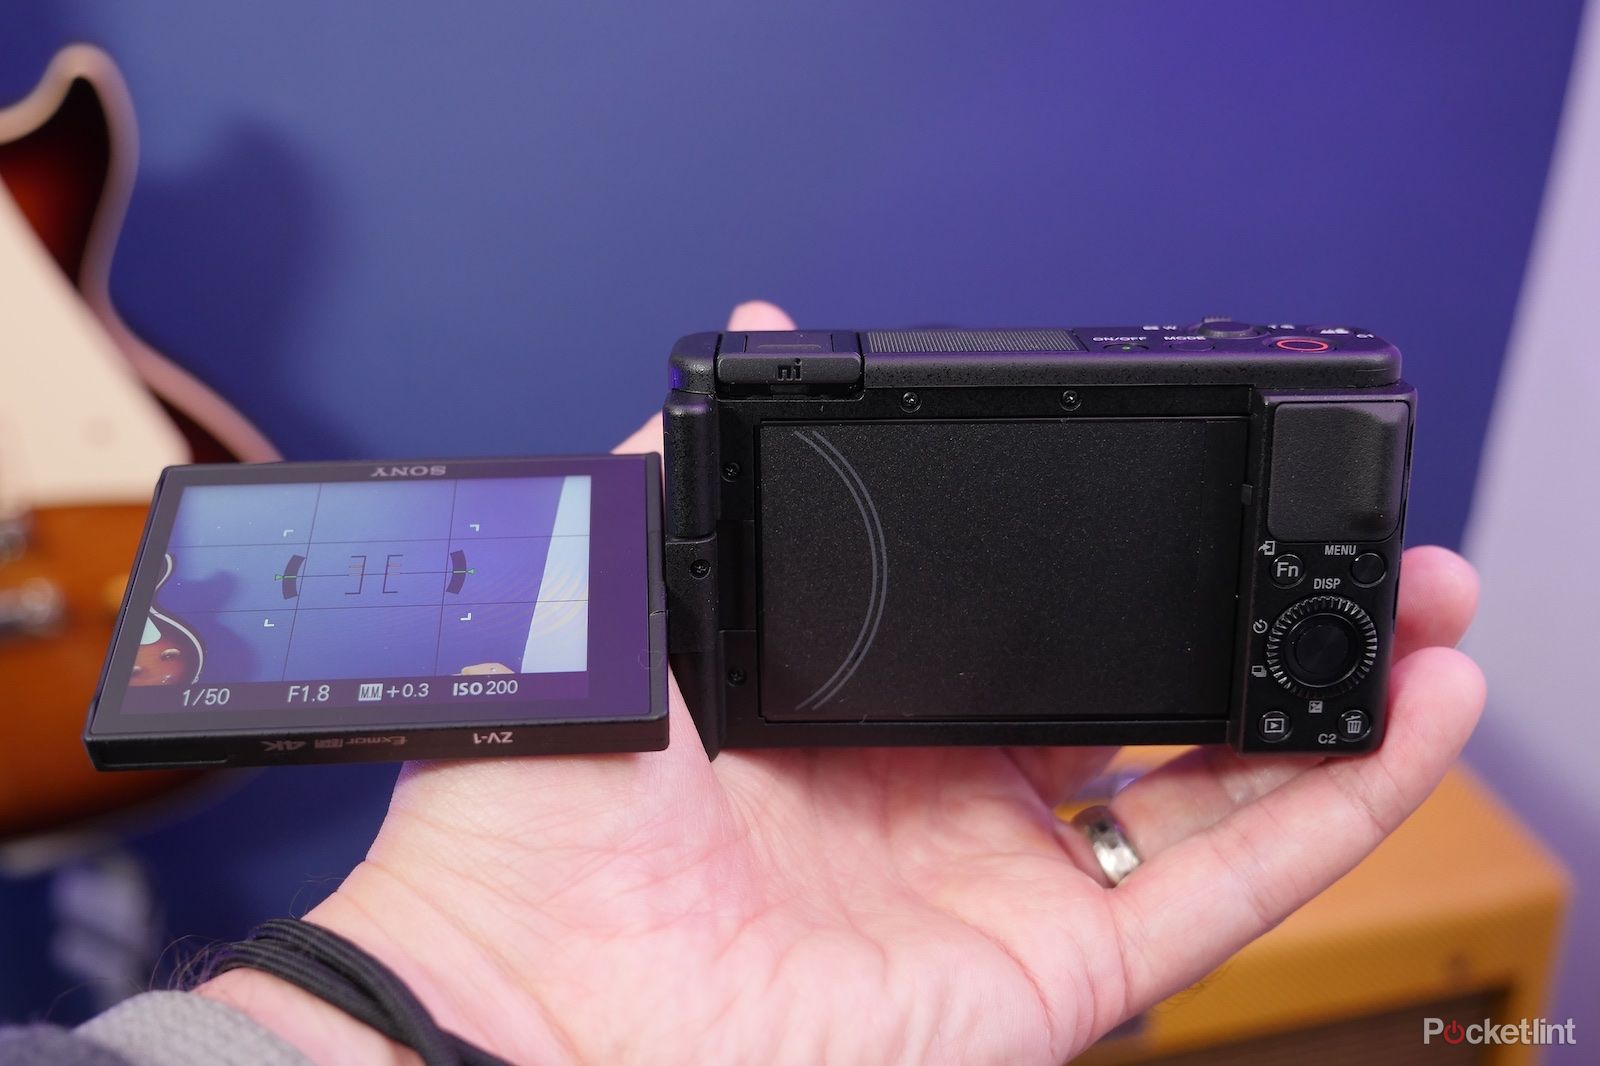 Sony ZV-1 hardware image 1